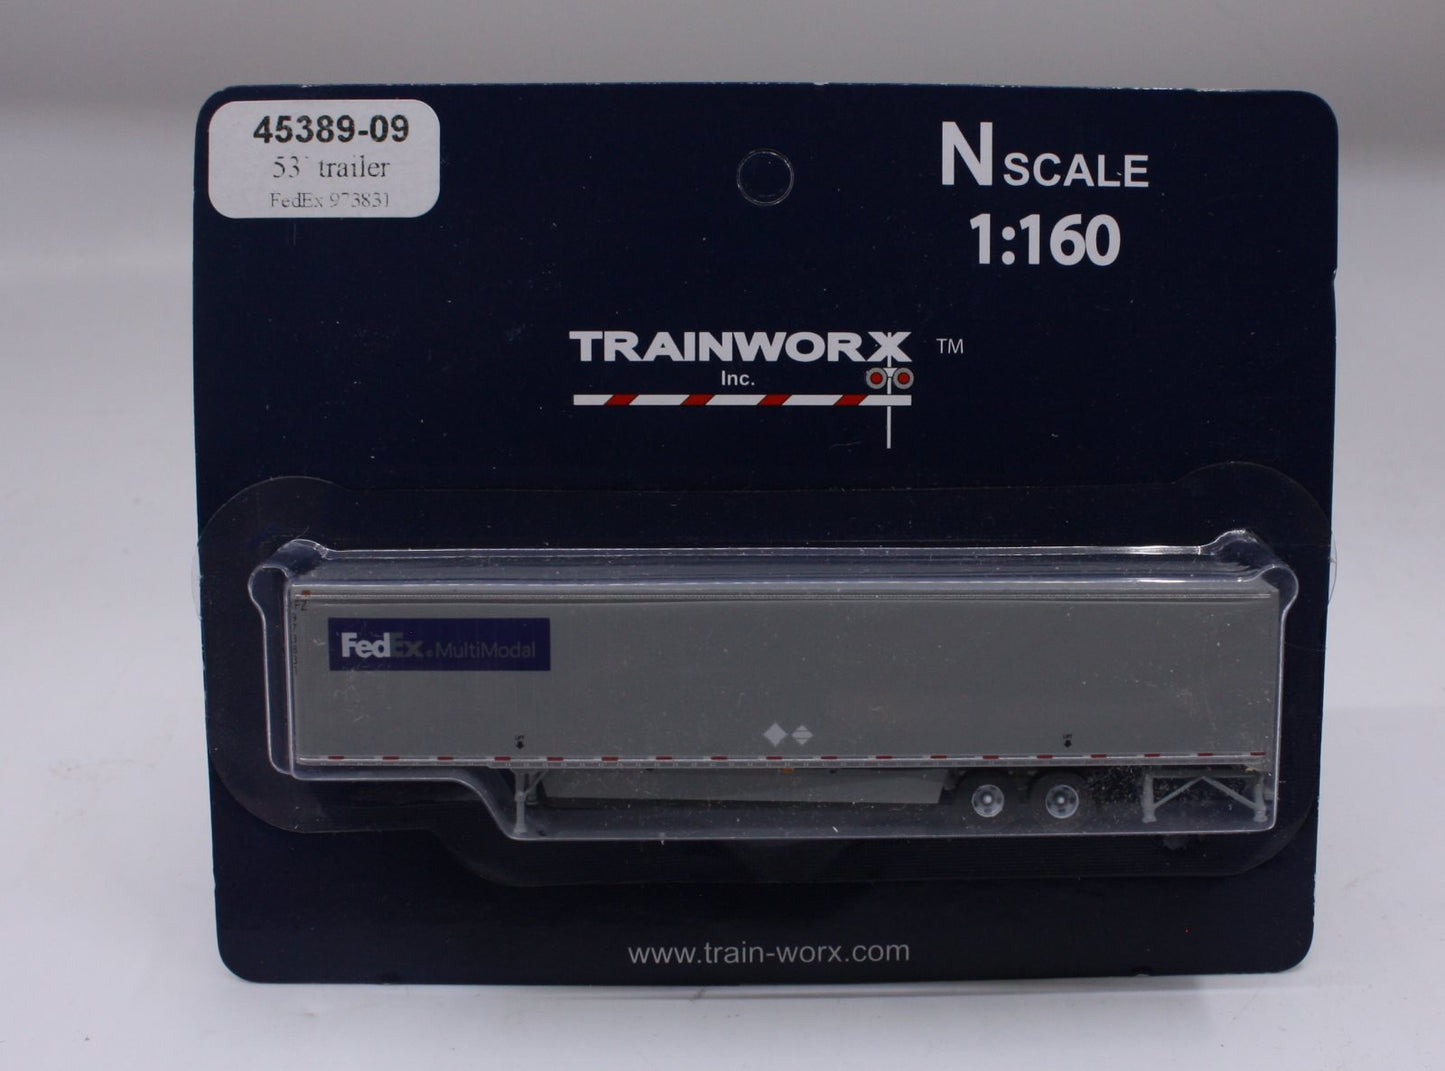 Trainworx Inc 45389-09 N Scale 53" Trailer FexEx 973831